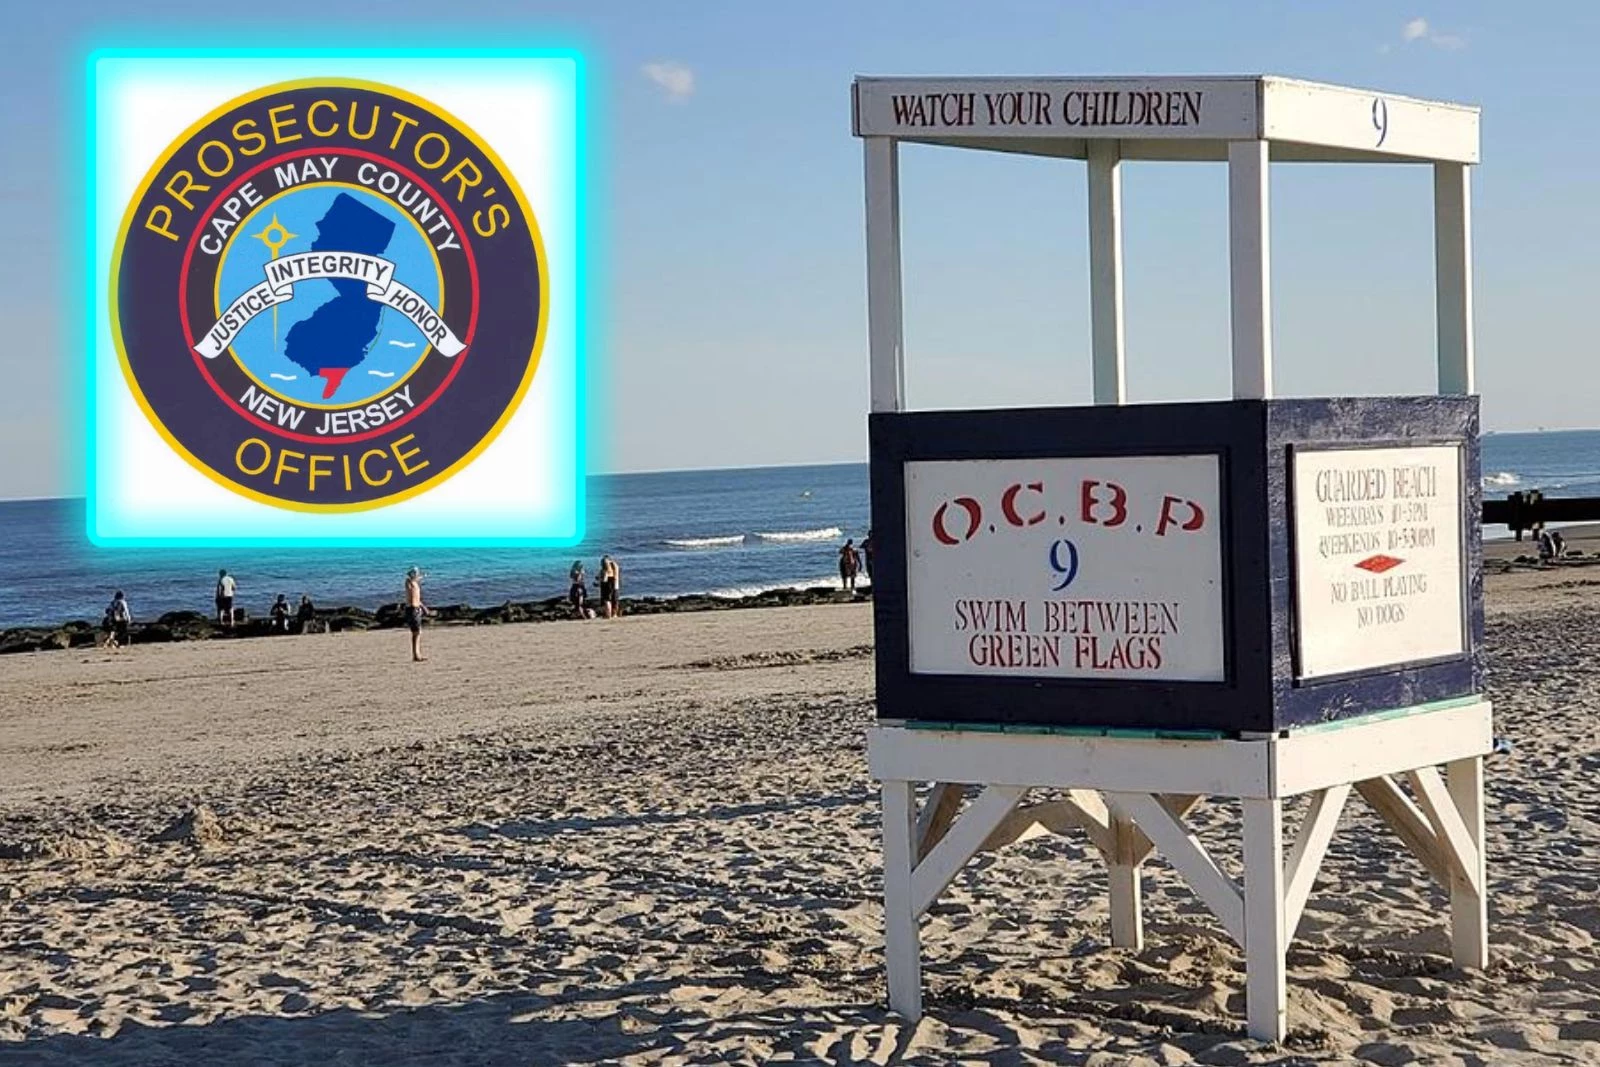 Caught Having Sex On Nude Beach - NJ teacher, ex-beach lifeguard indicted for sex assault of minor